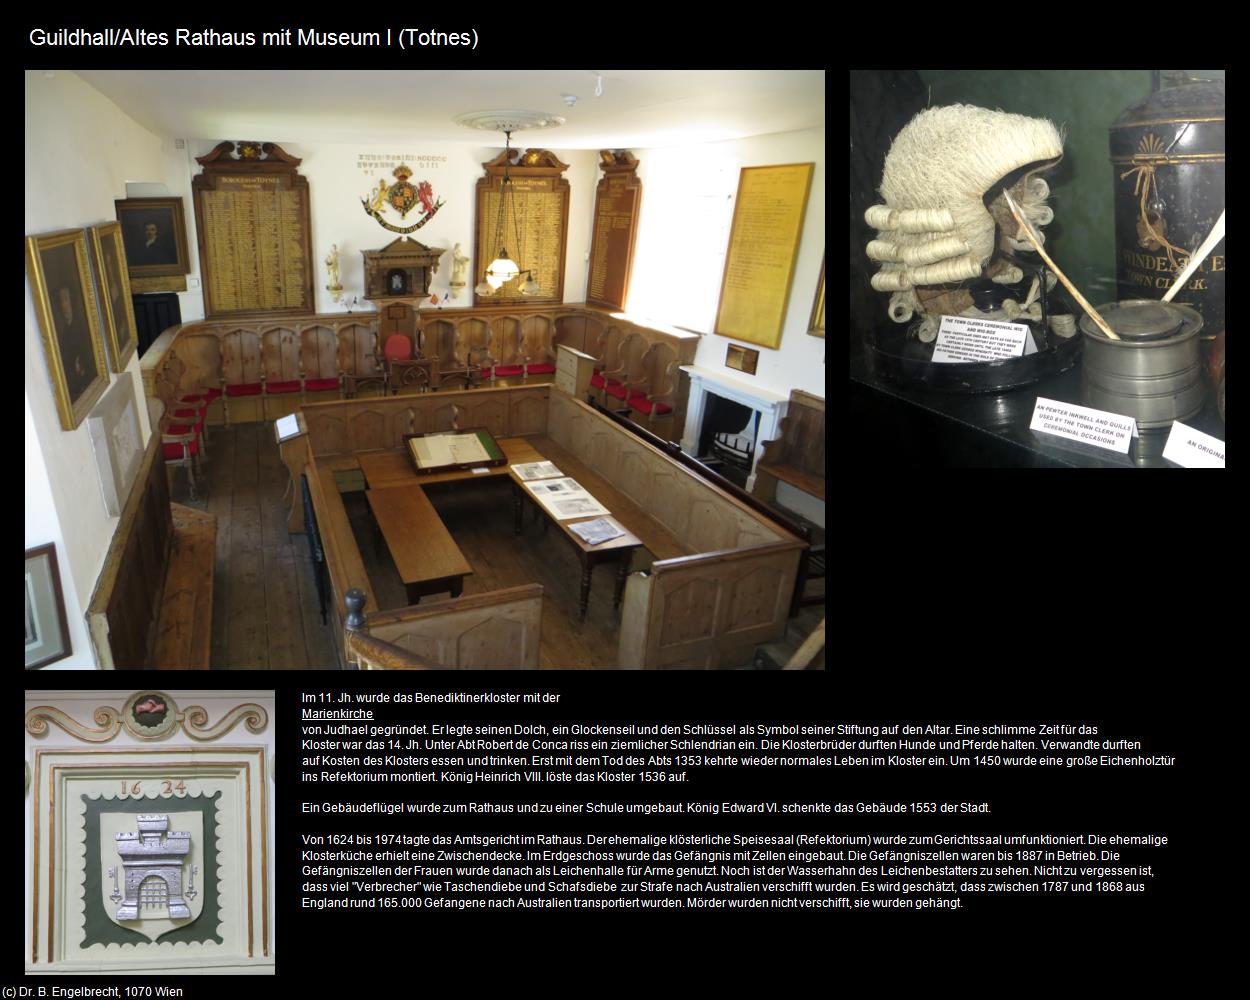 Guildhall/Rathaus mit Museum I (Totnes, England) in Kulturatlas-ENGLAND und WALES(c)B.Engelbrecht